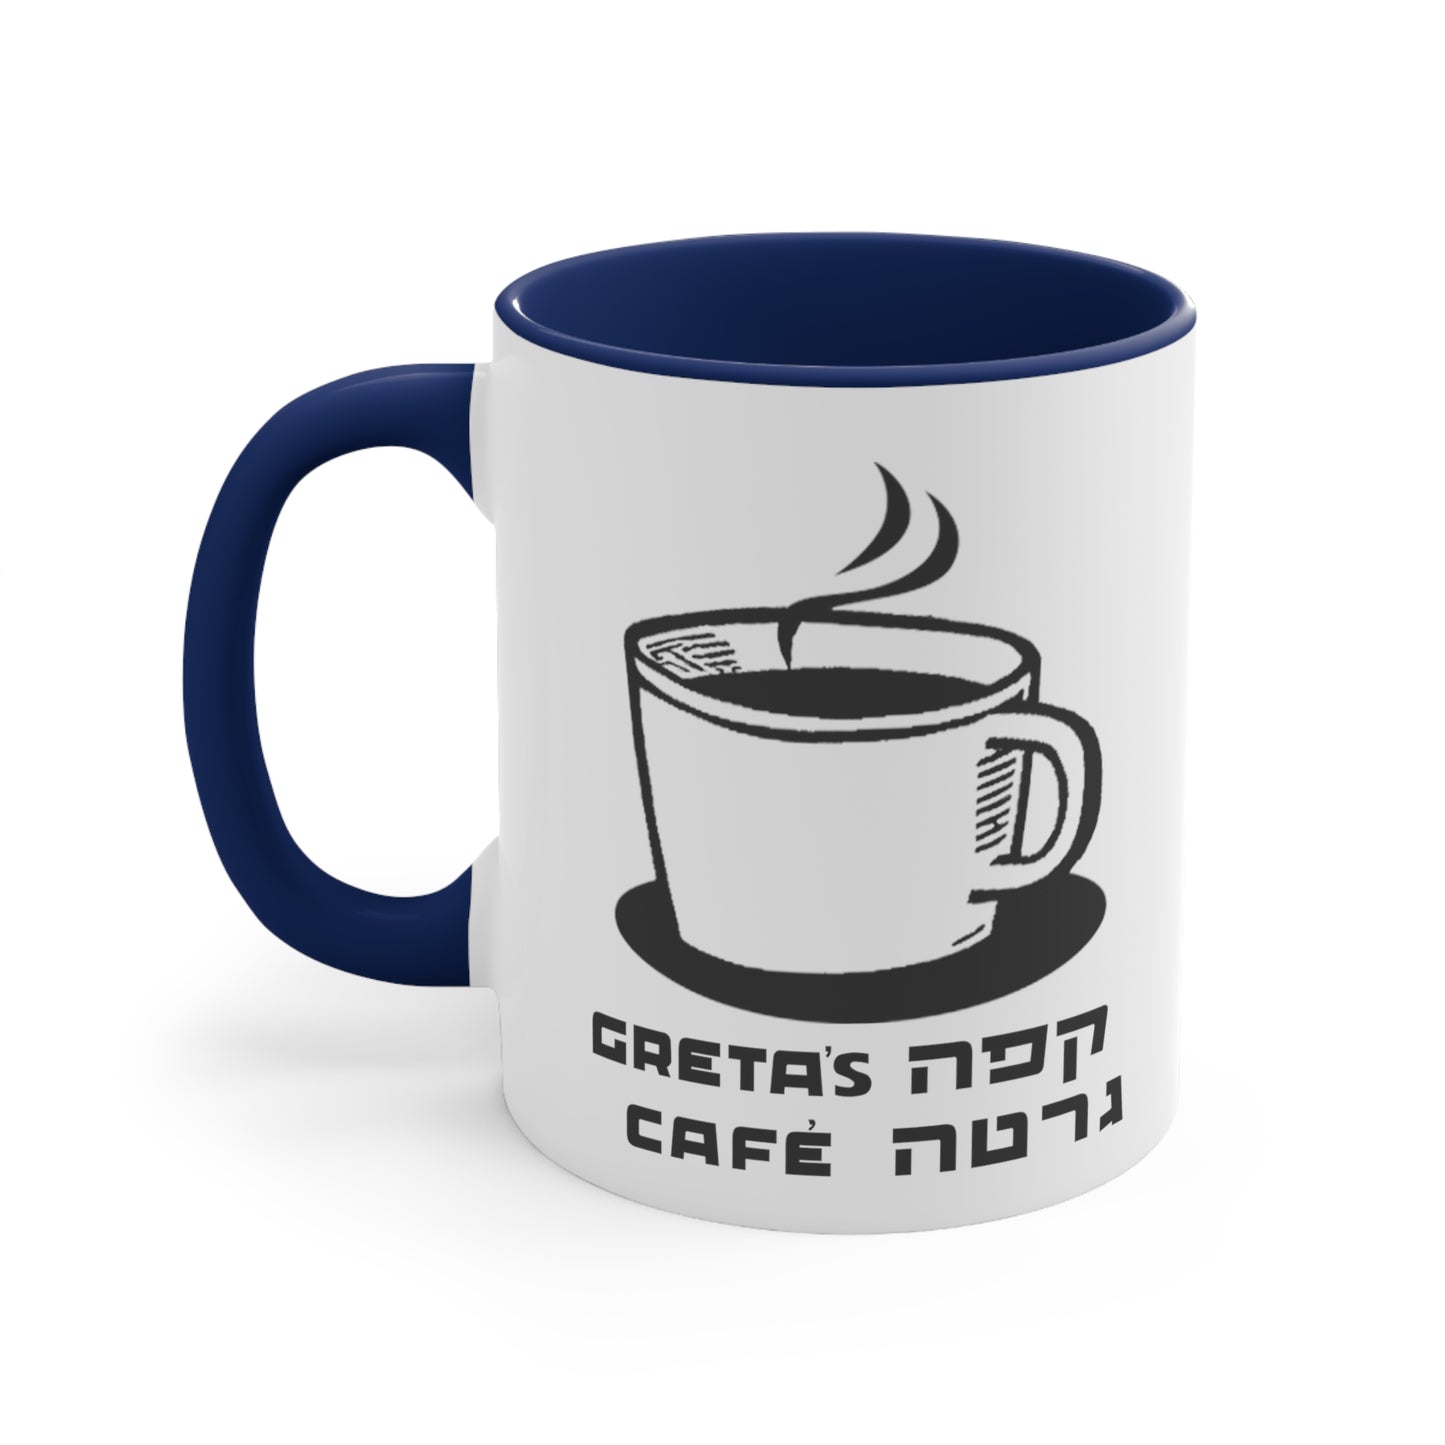 Greta's Cafe Accented Mug - Navy